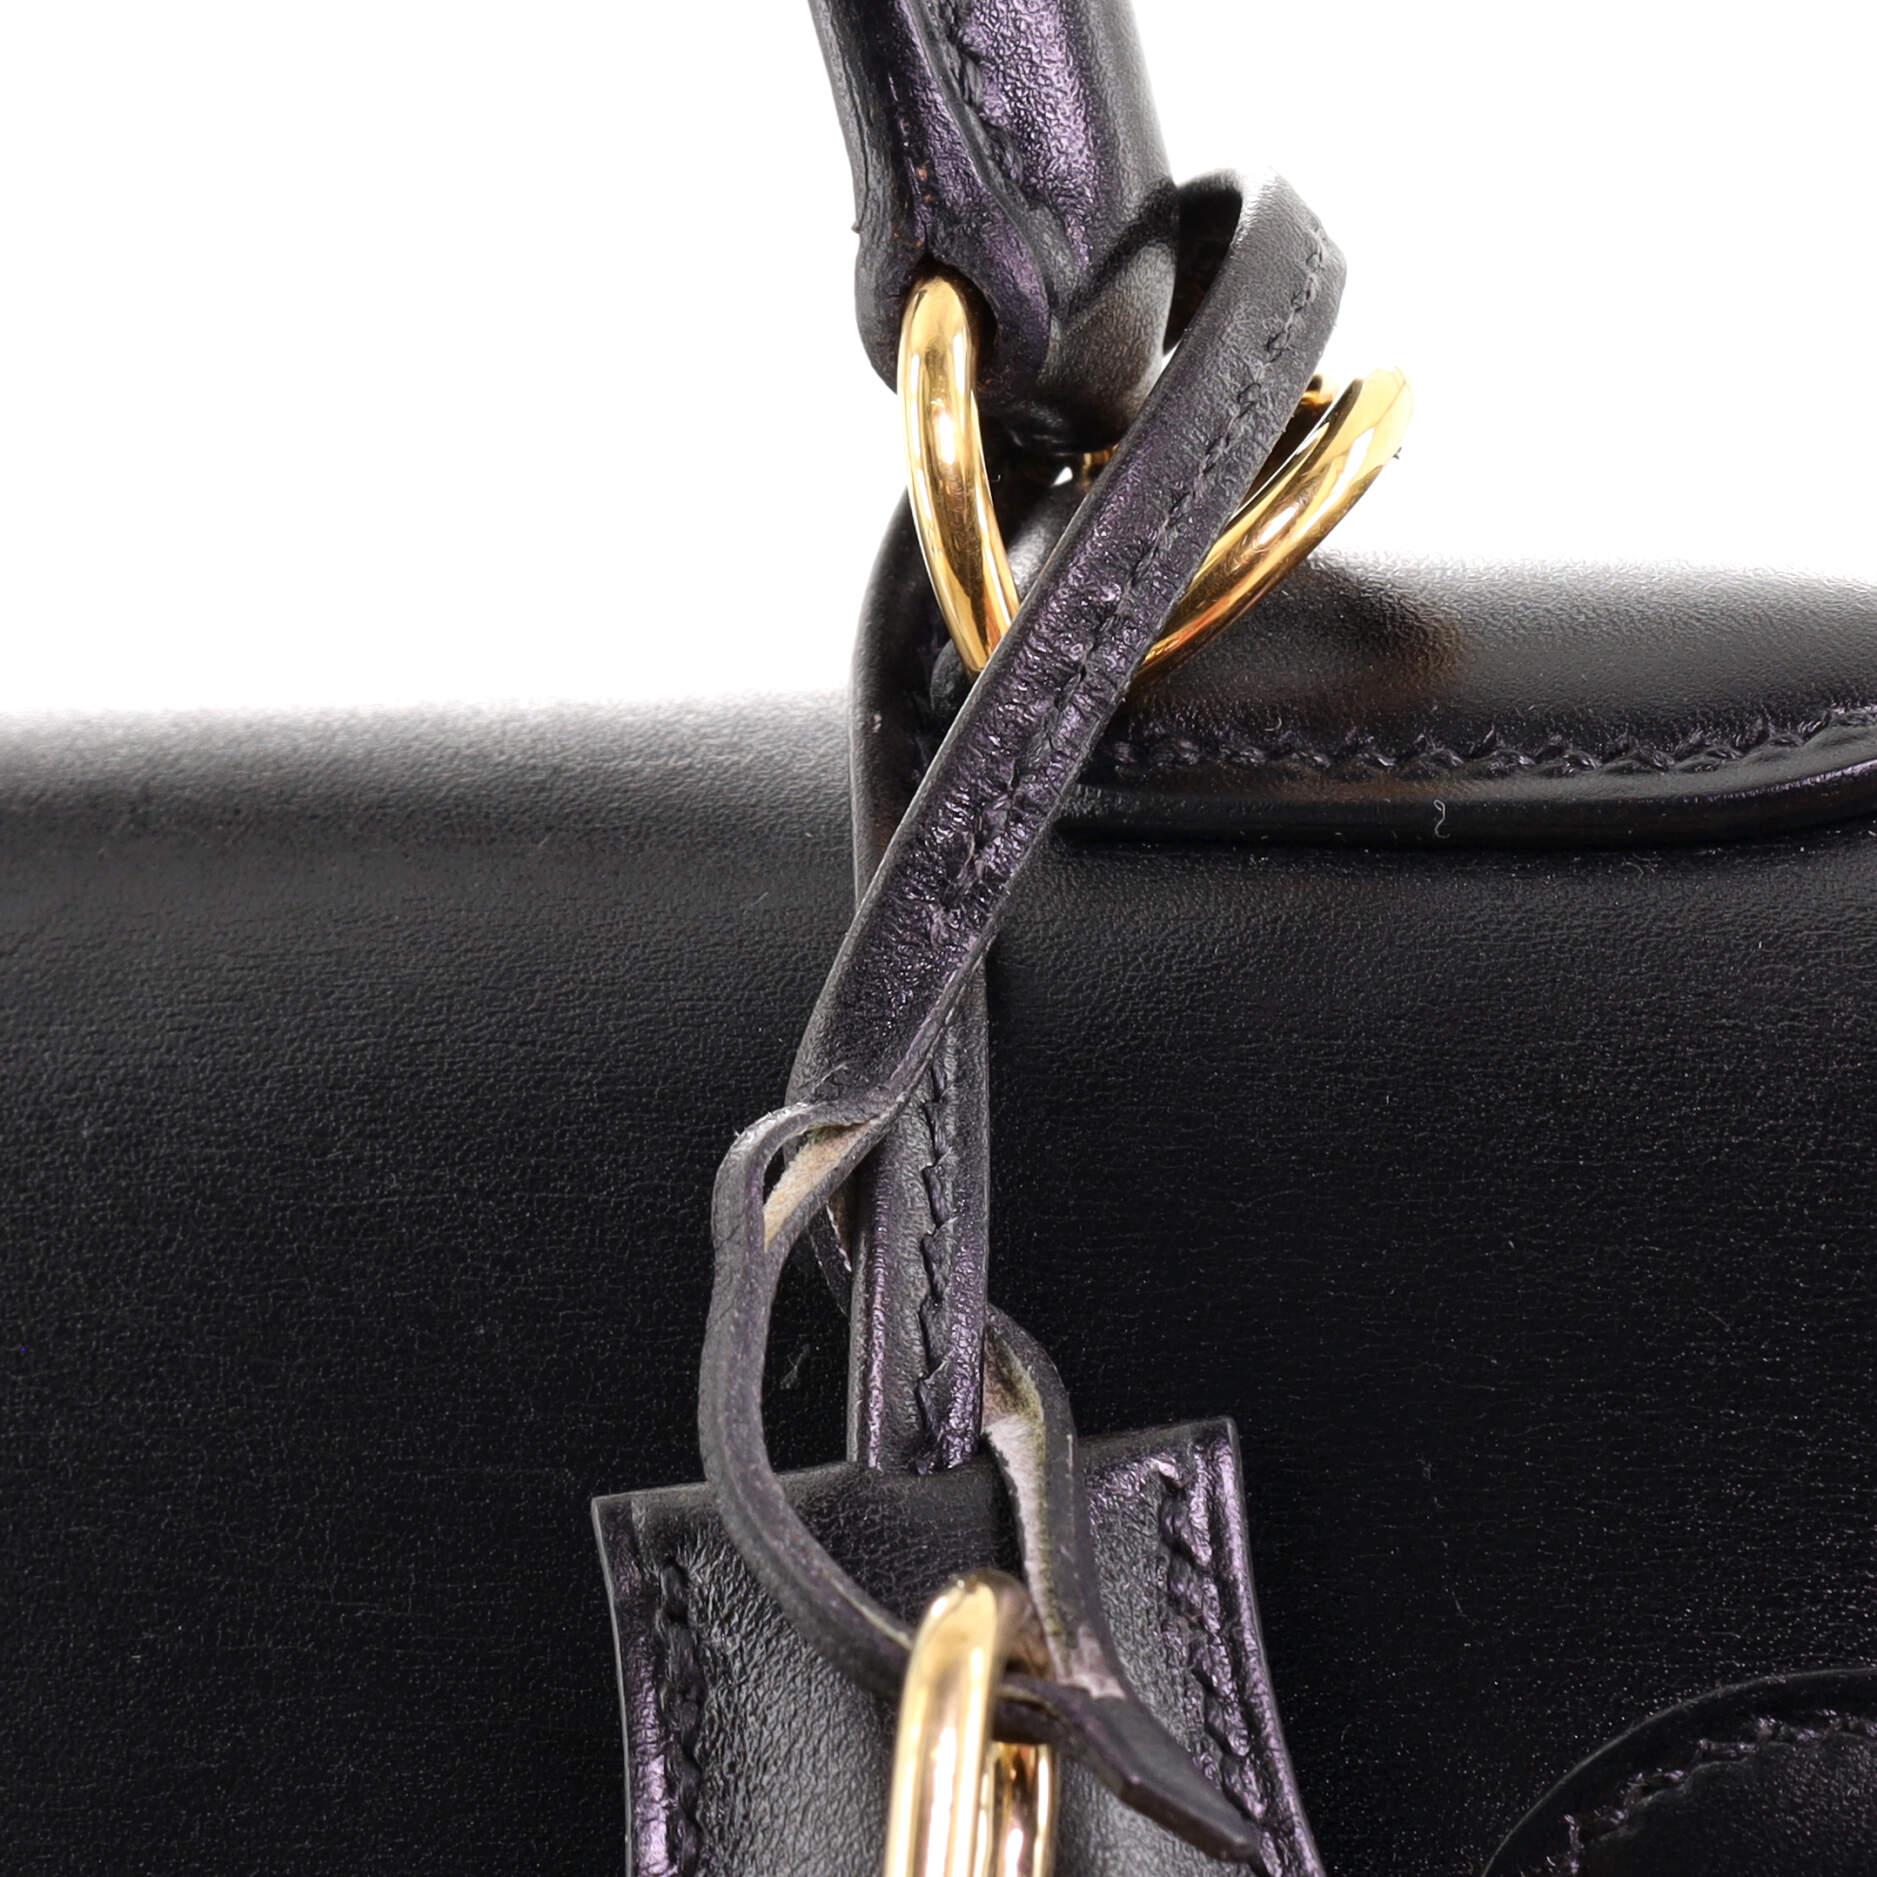 Hermes Kelly Handbag Noir Box Calf with Gold Hardware 35 4